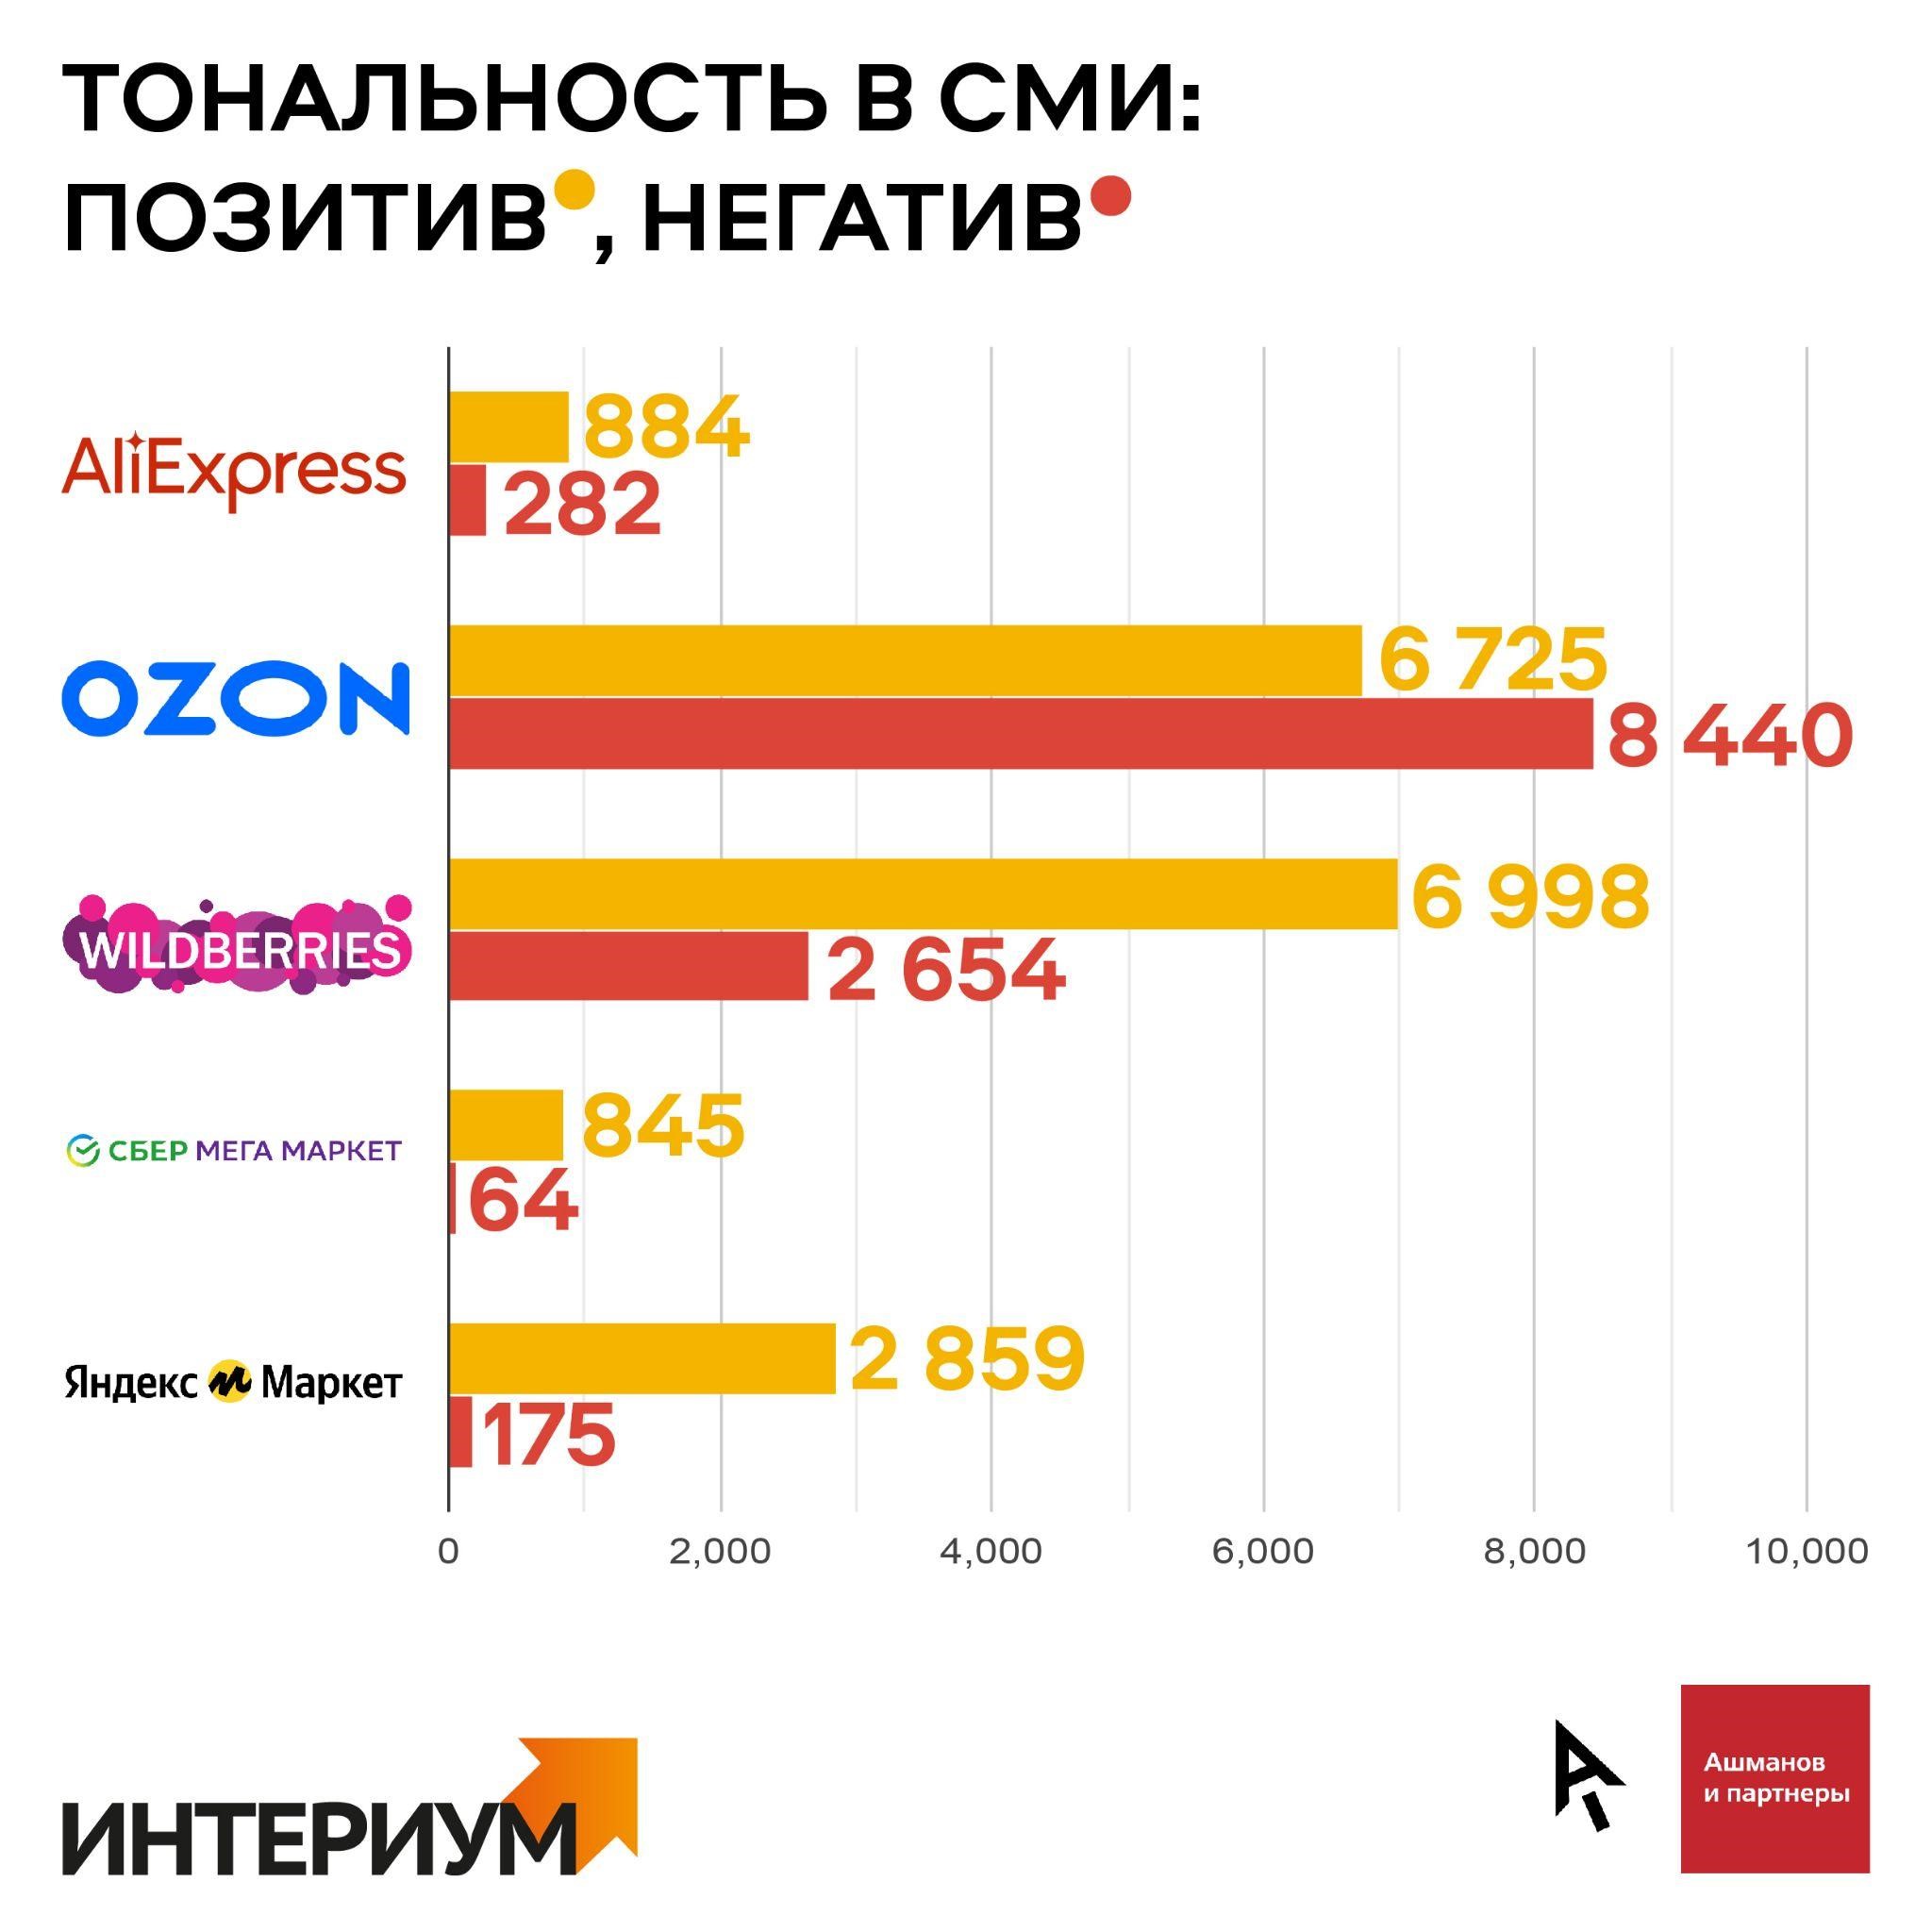 В соцсетях Ozon хвалят в 2,5 раза чаще, чем Wildberries, AliExpress, Яндекс.Маркет и Сбер вместе взятых | Анализ рынков